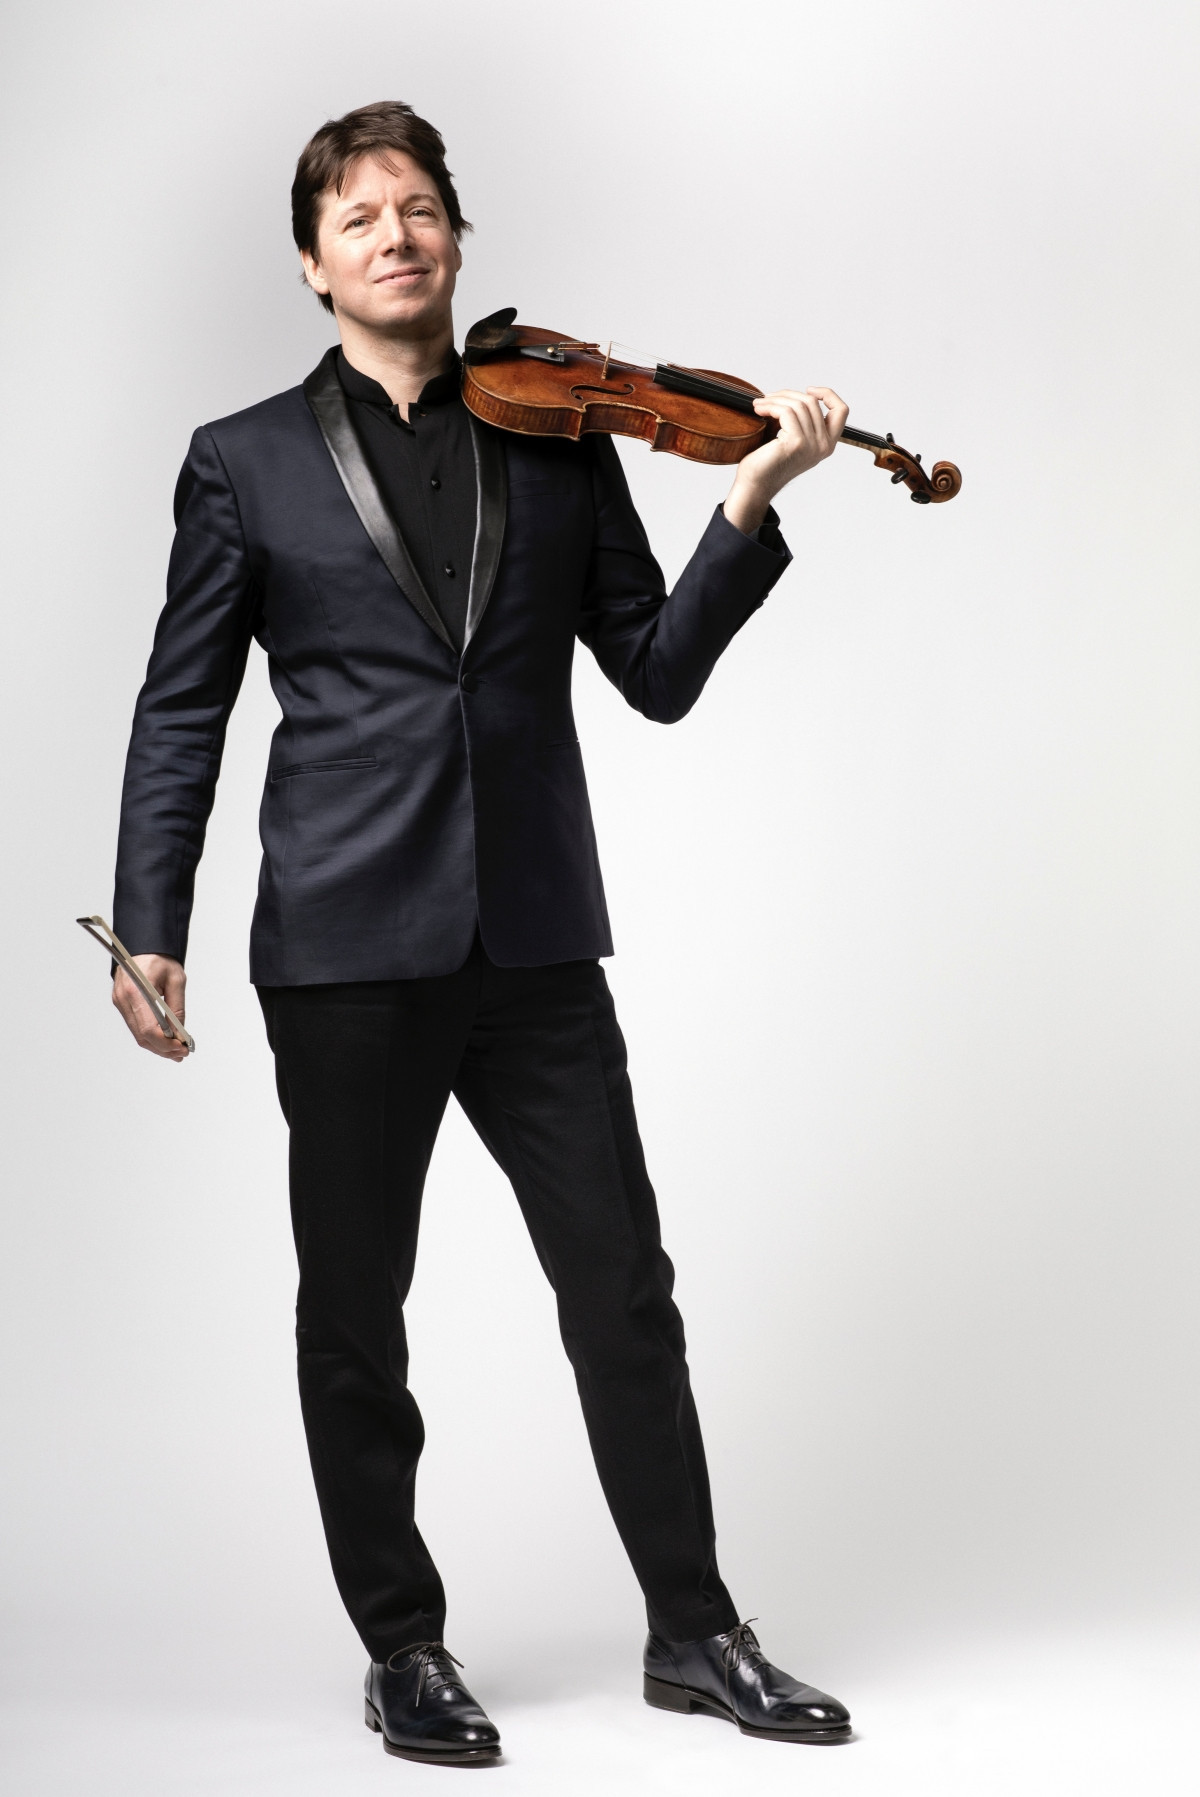 NDR Elbphilharmonie Orchester | Alan Gilbert | Joshua Bell